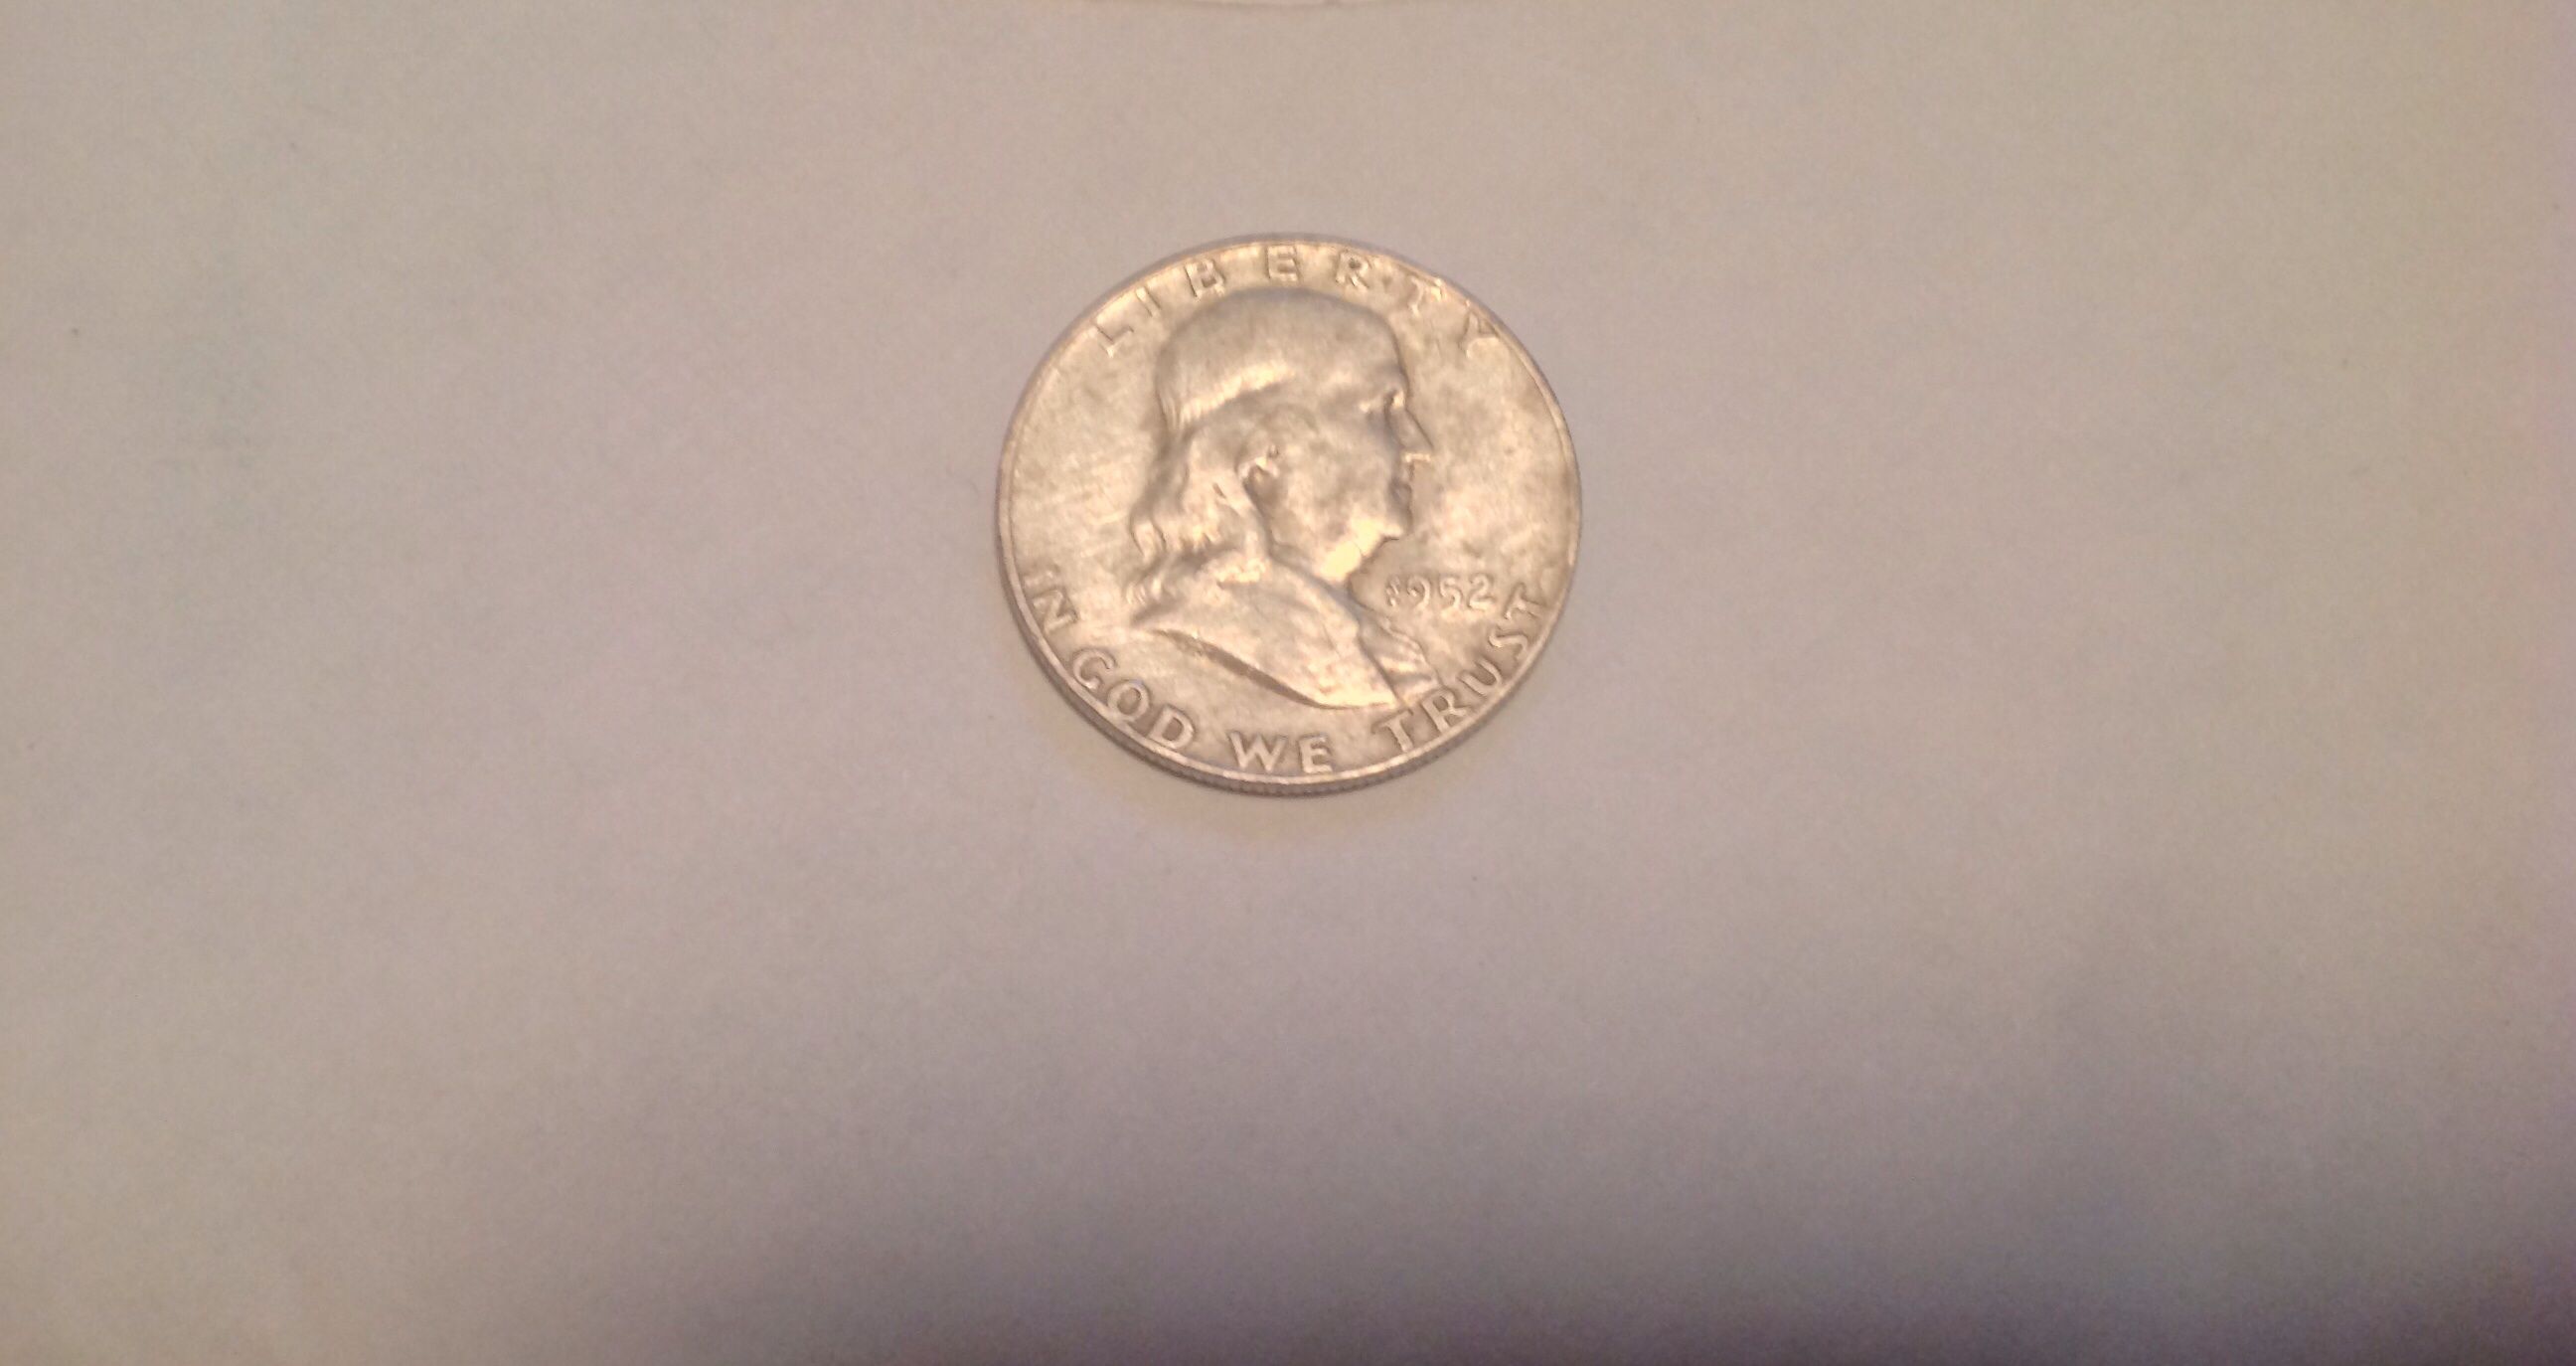 1952 Franklin Half Dollar Silver